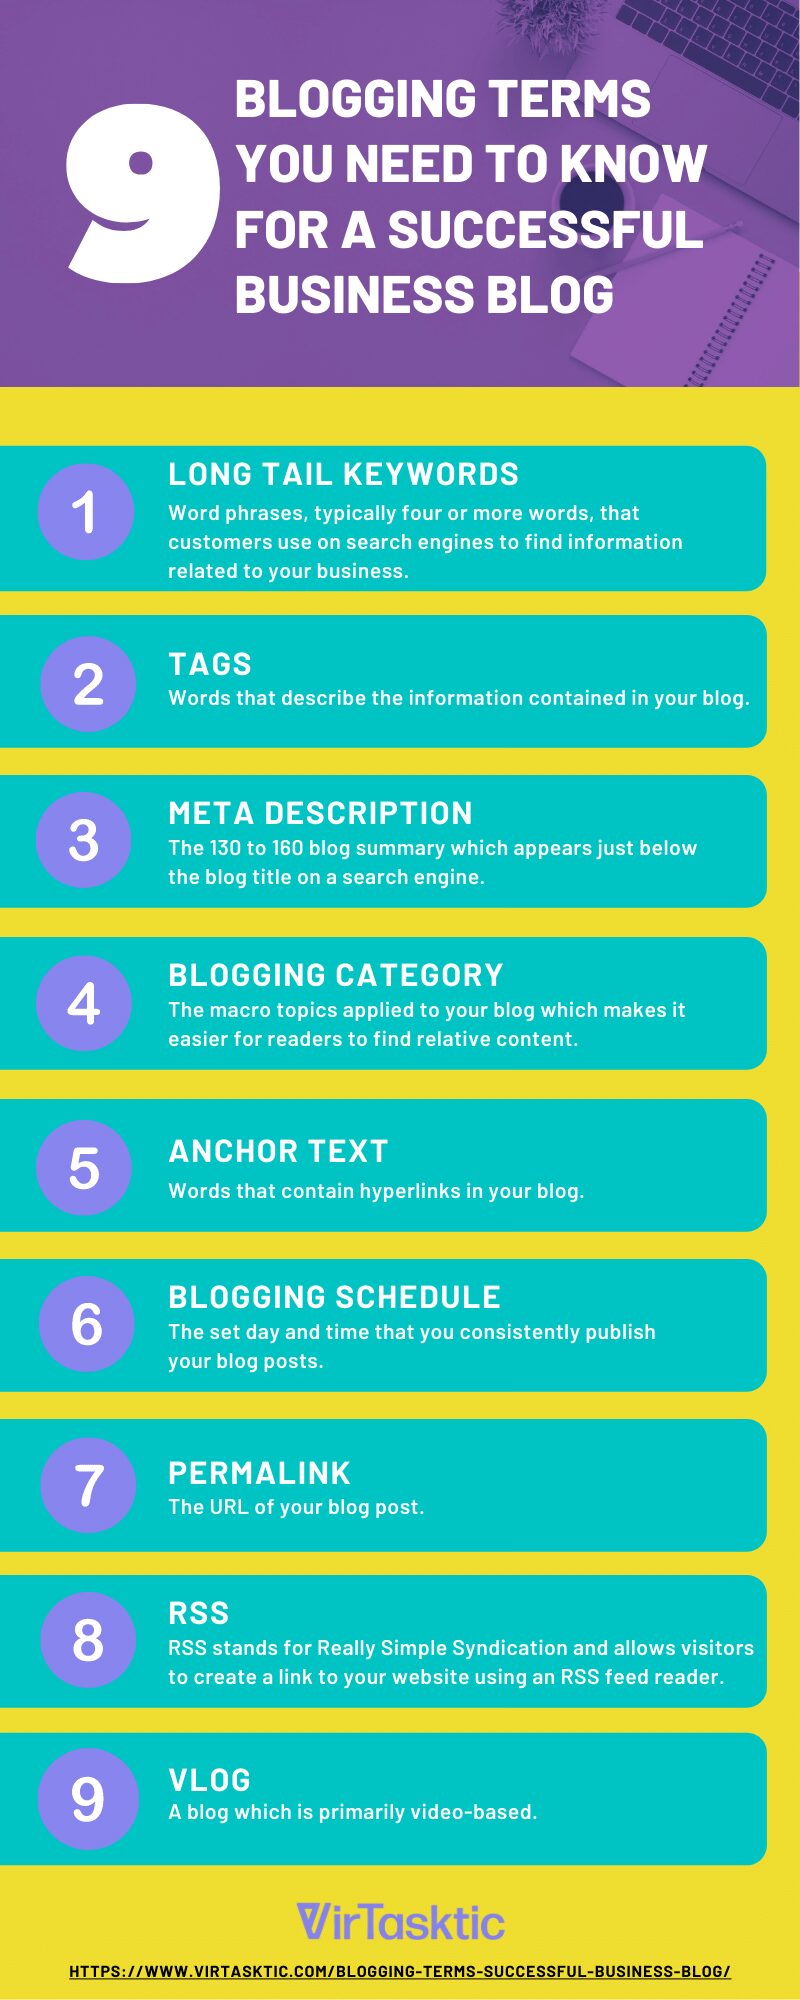 9 blogging terms